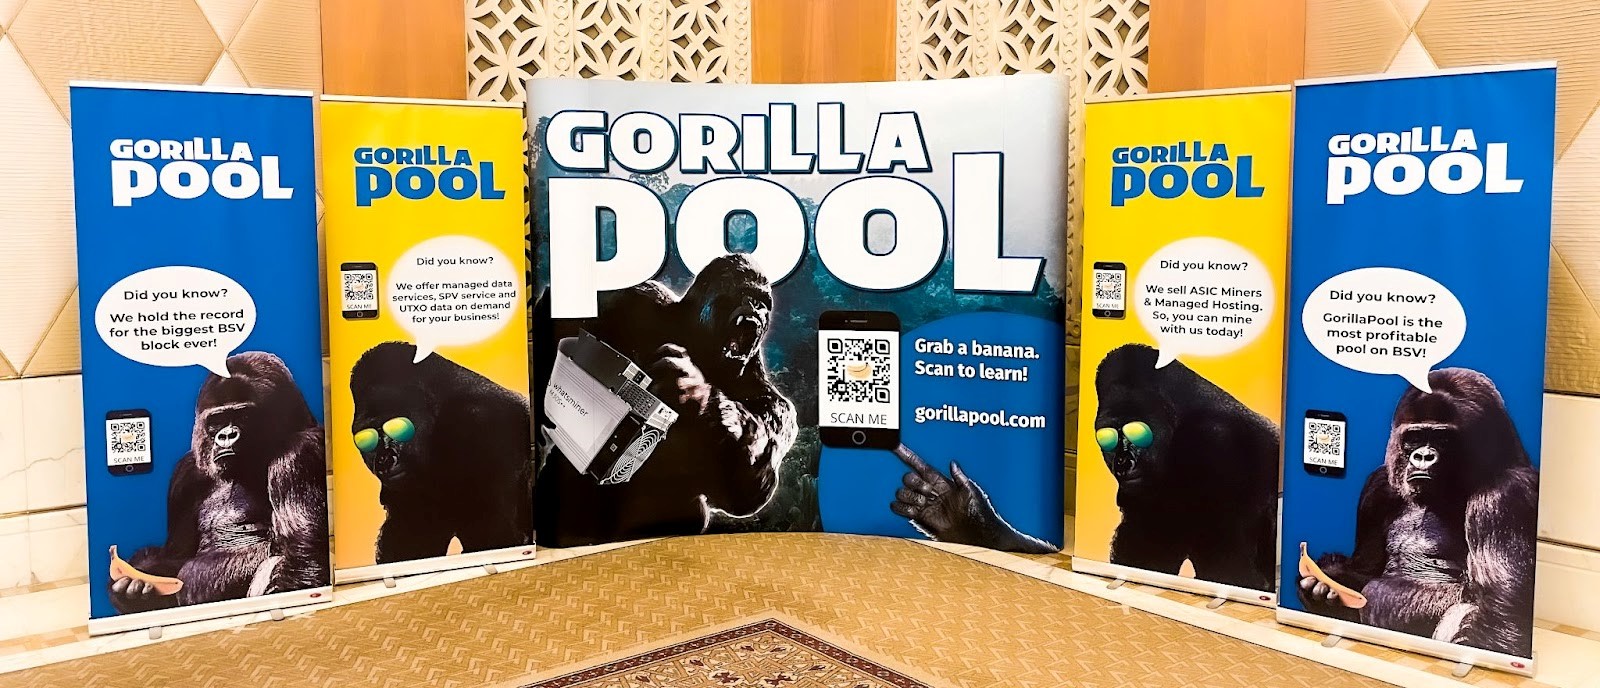 Gorilla pool booth on GBC Dubai